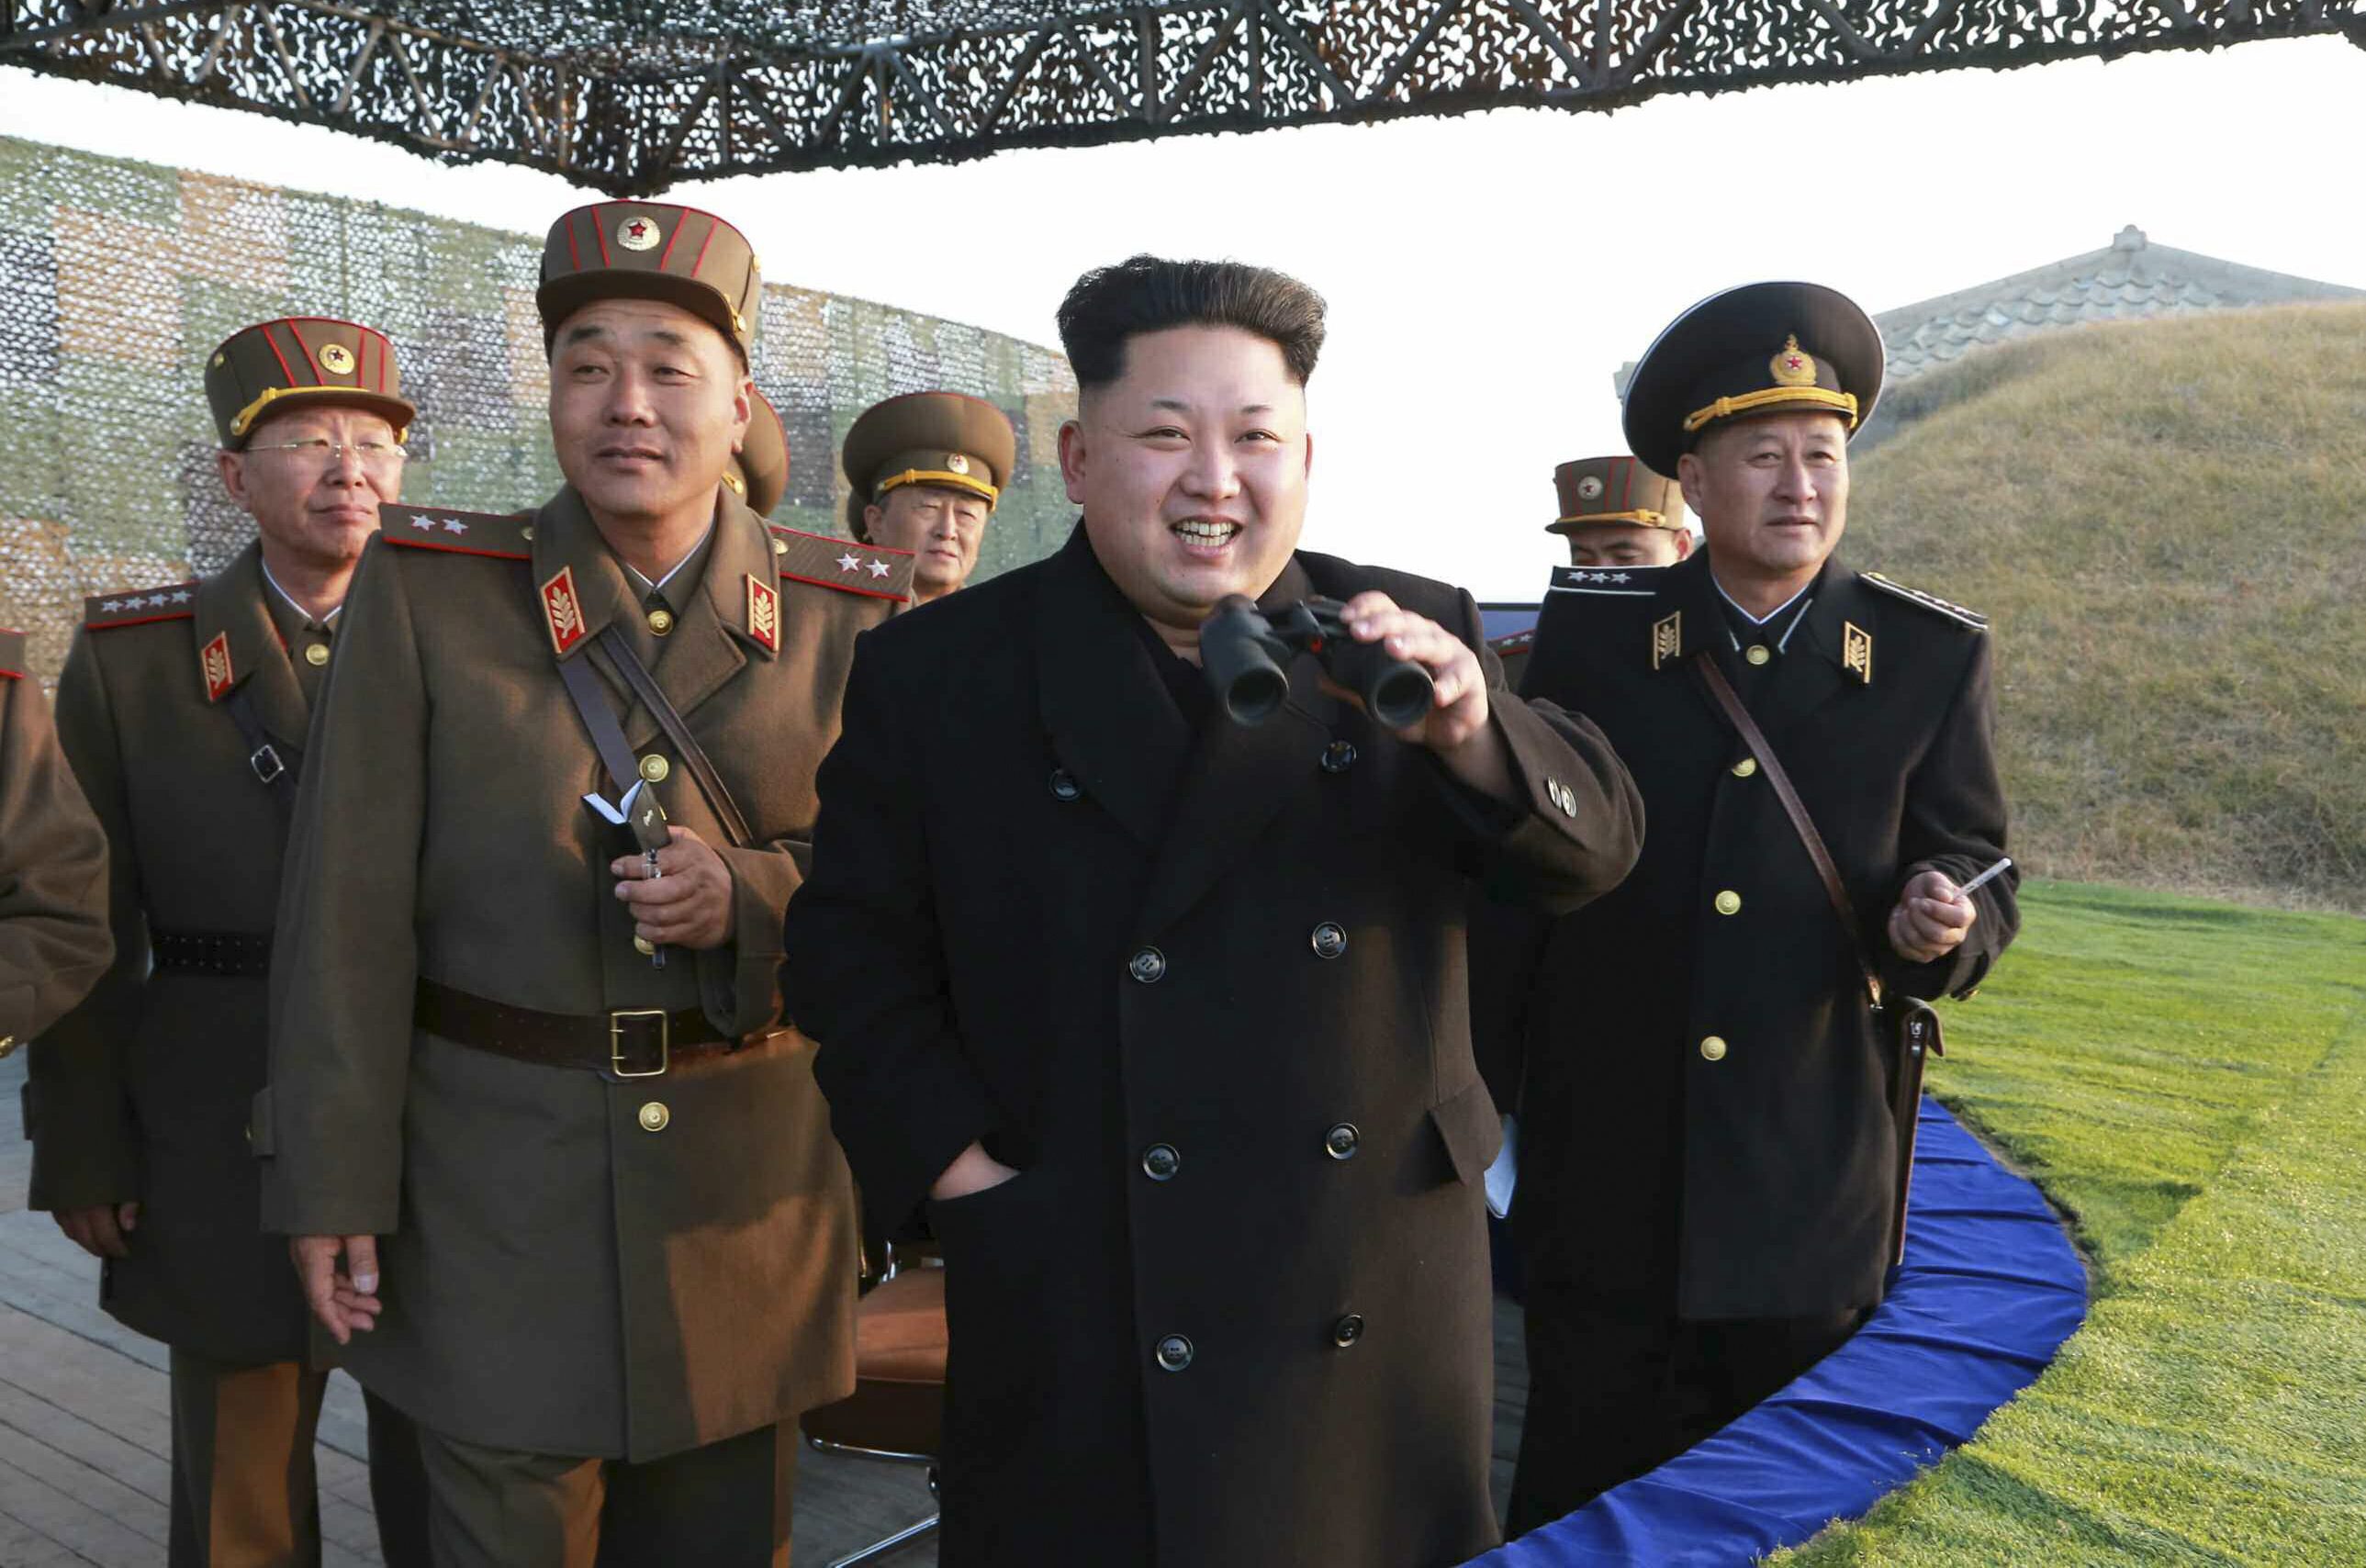 kim jong-un noord korea kernwapen propagandafoto's